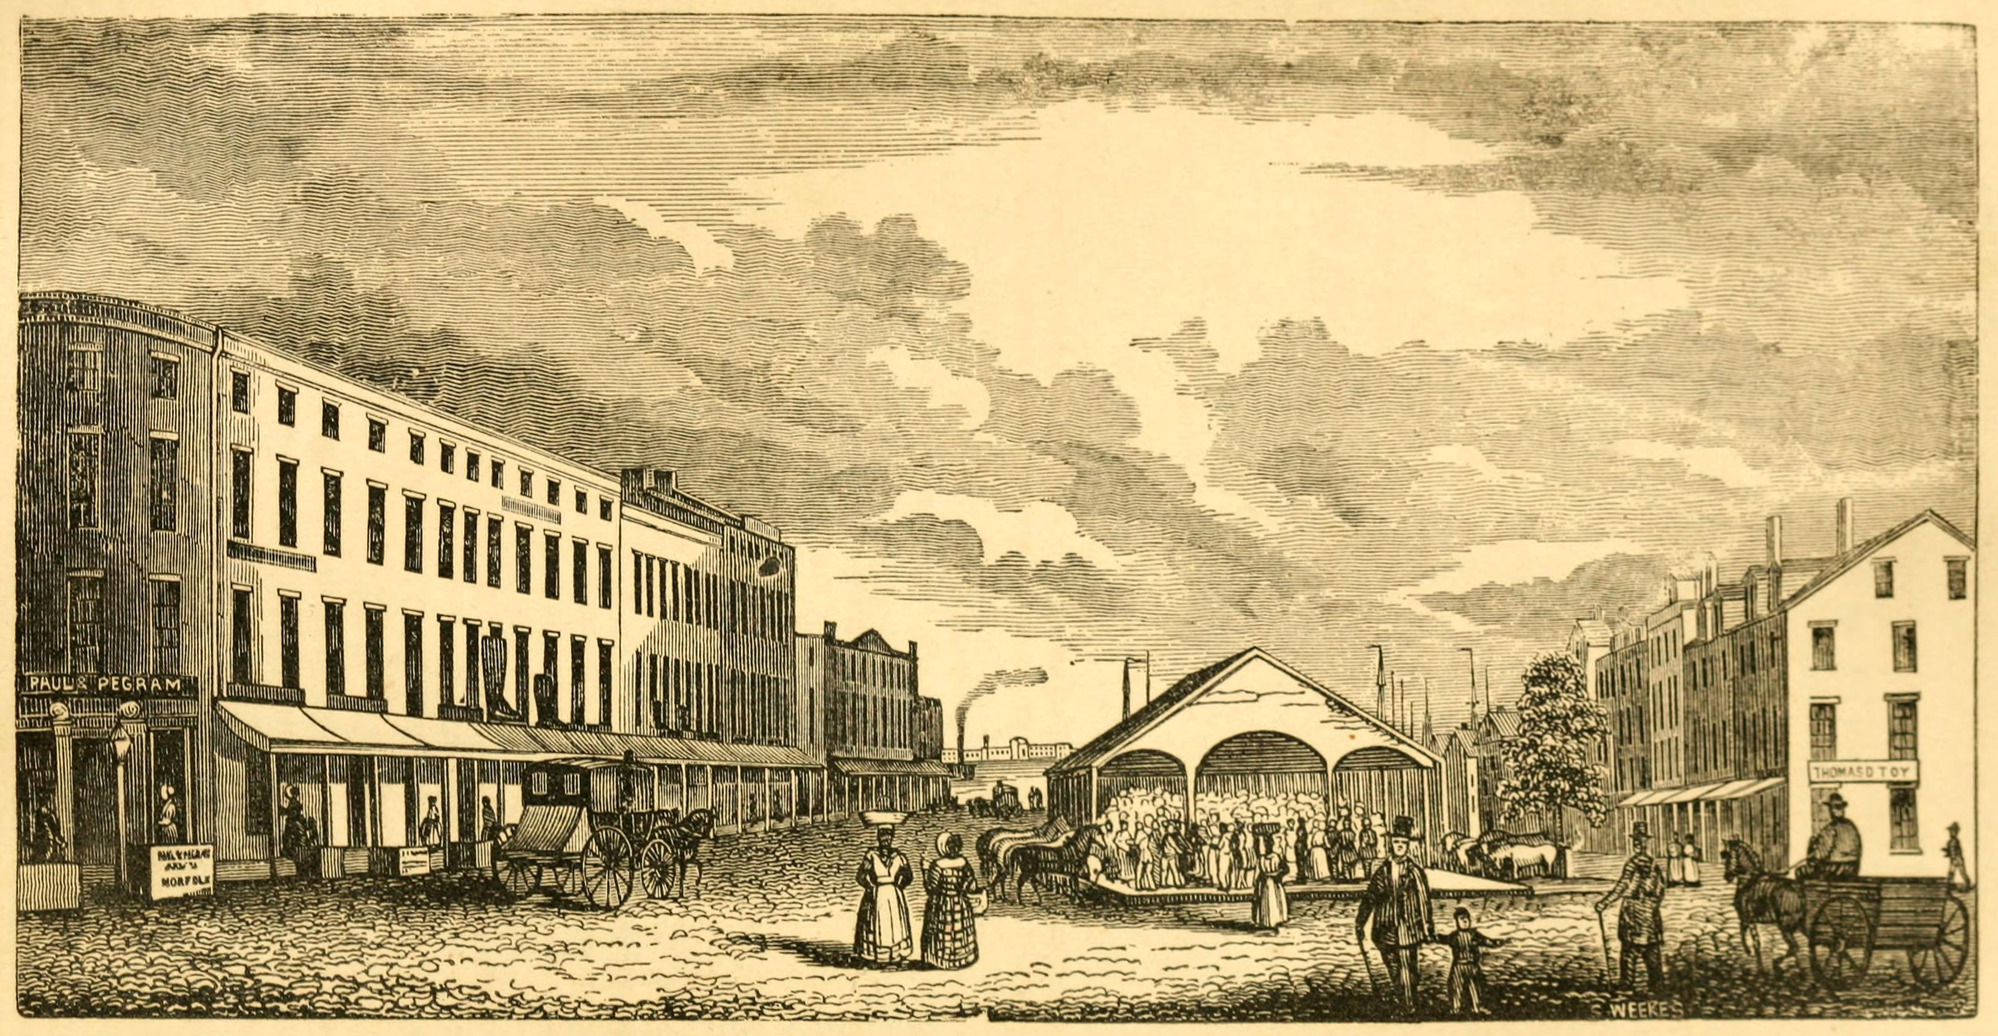 Sketch of Market Square in Norfolk, Virginia. (1845)